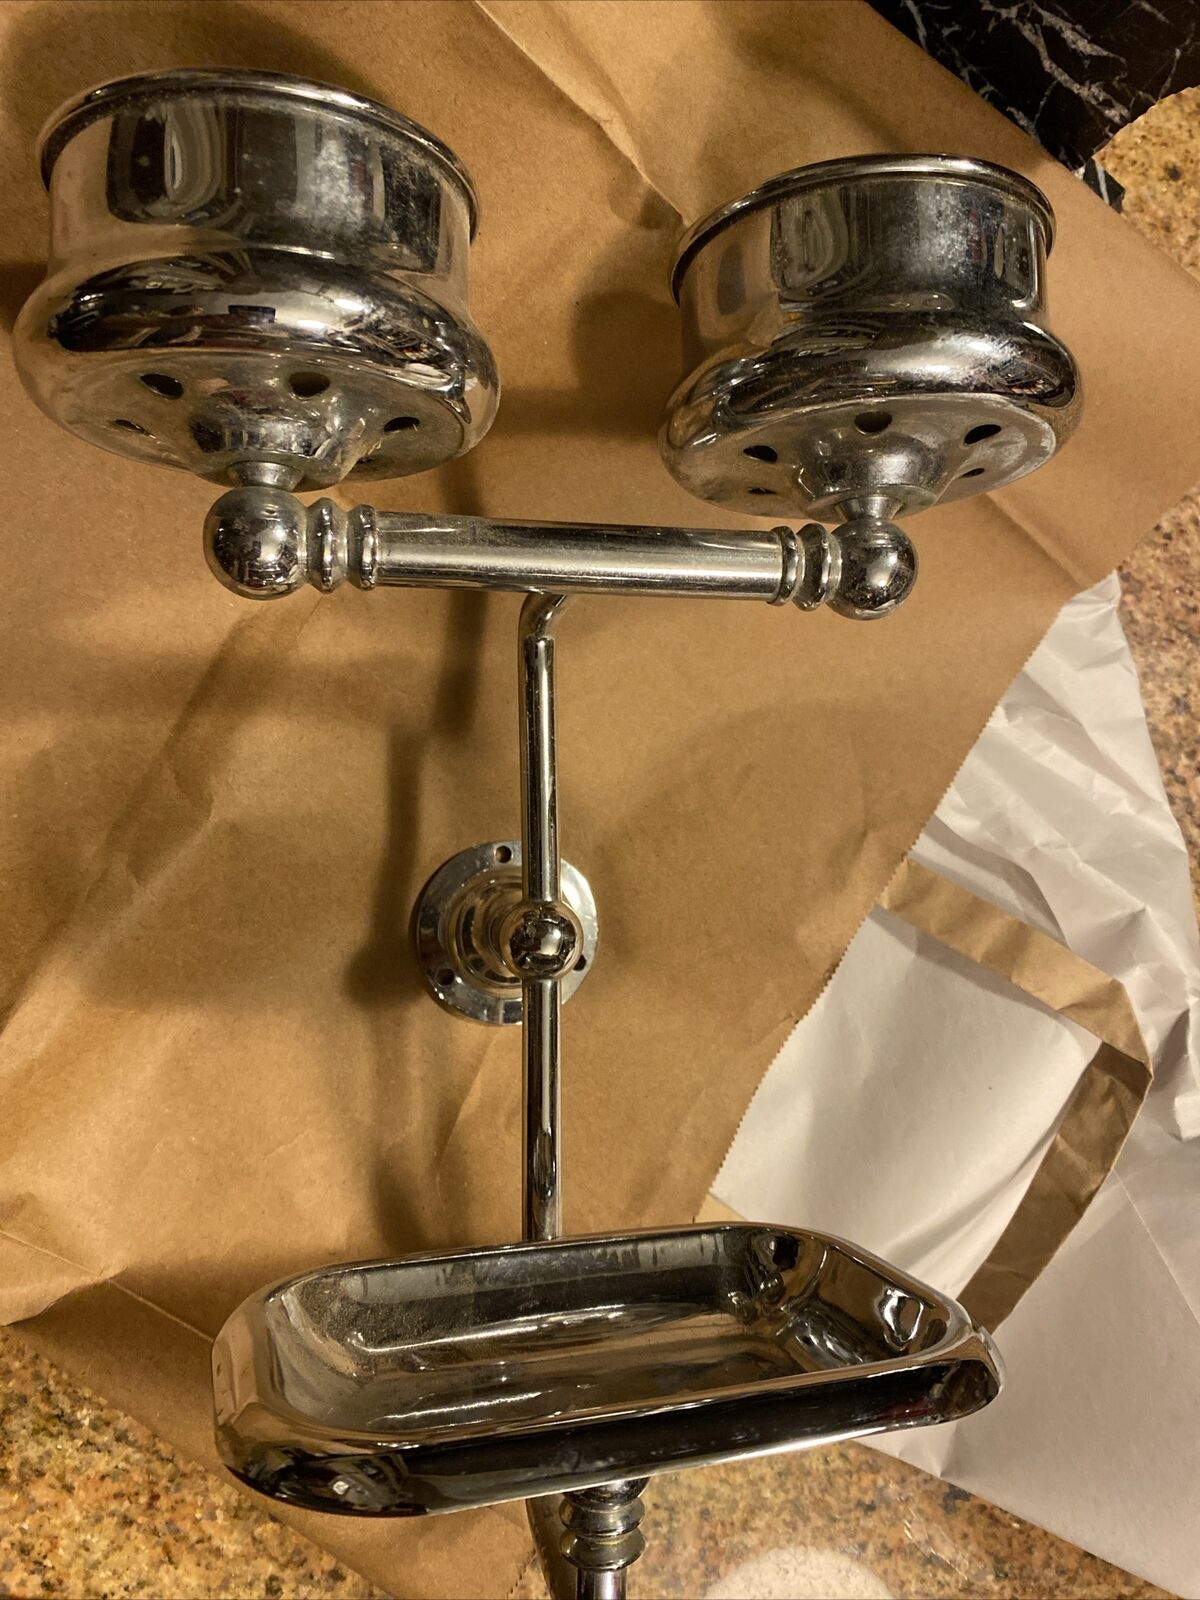 VTG ANTQ BATHROOM SOAP / DOUBLE CUP HOLDER XL 11x8 Chrome?  Brass?